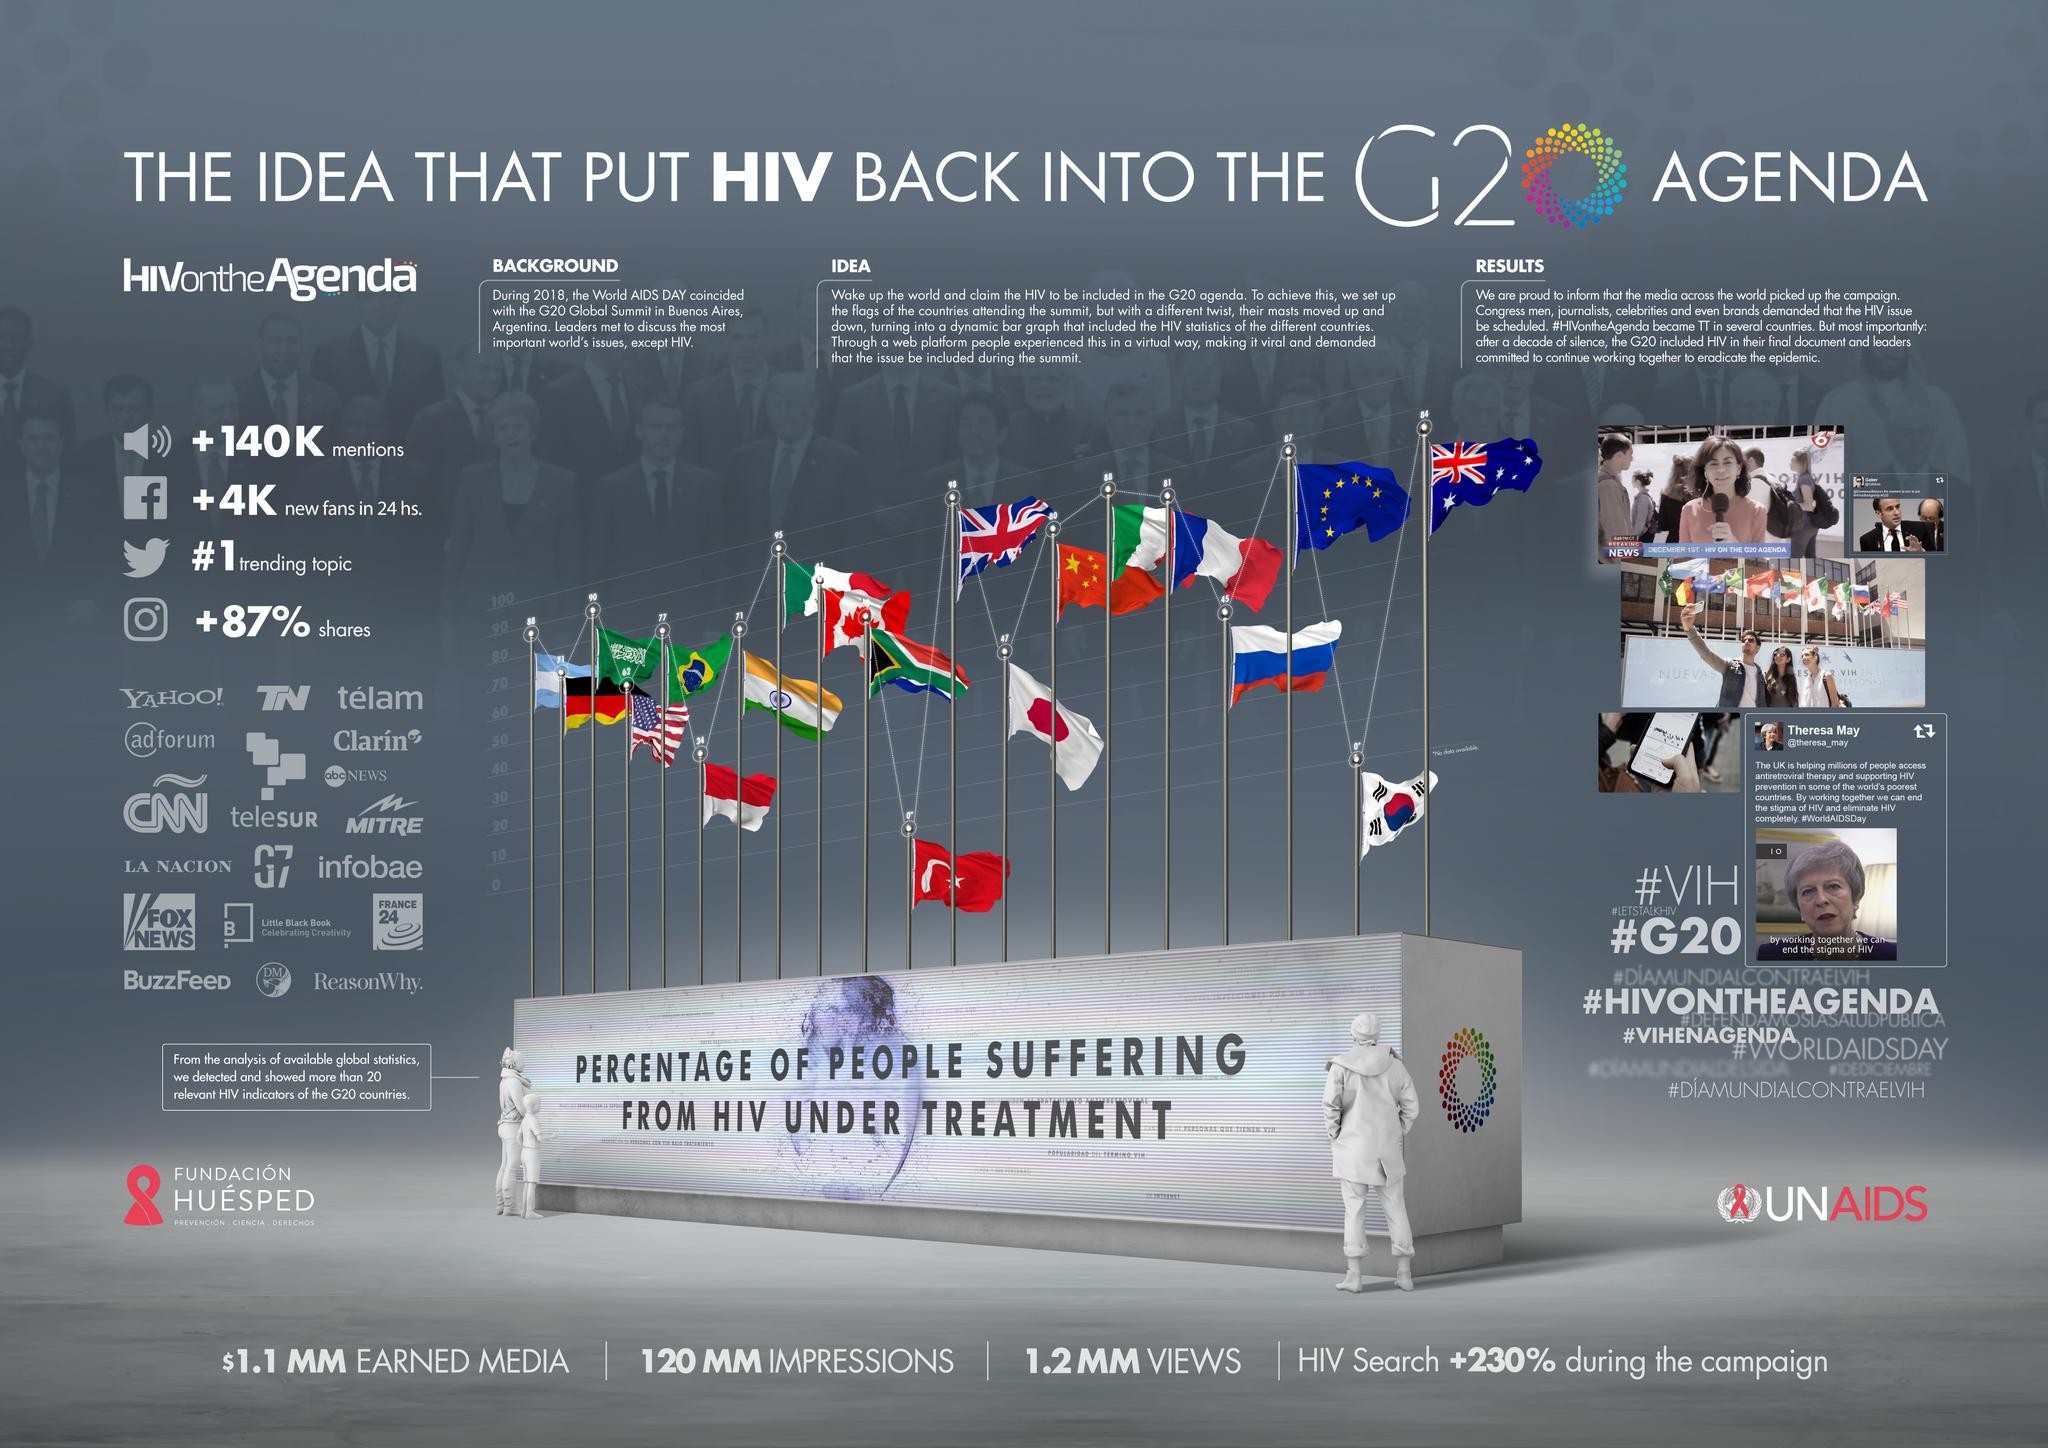 HIV on the Agenda